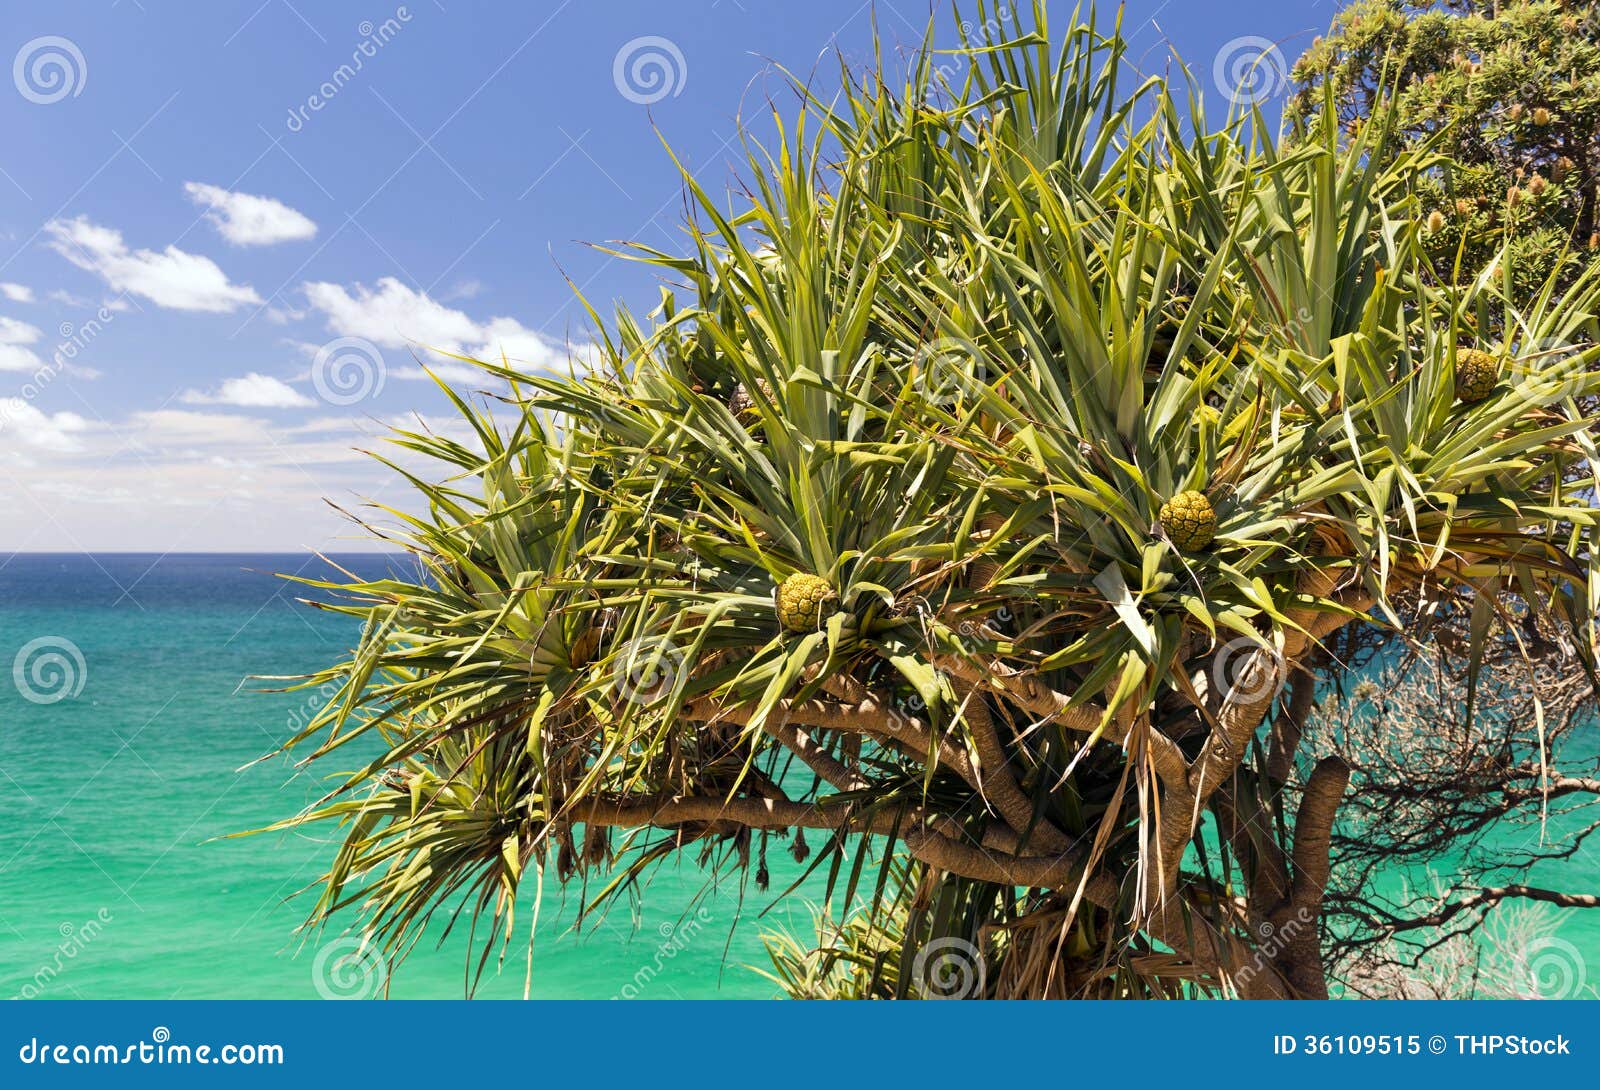 pandanus palm tree